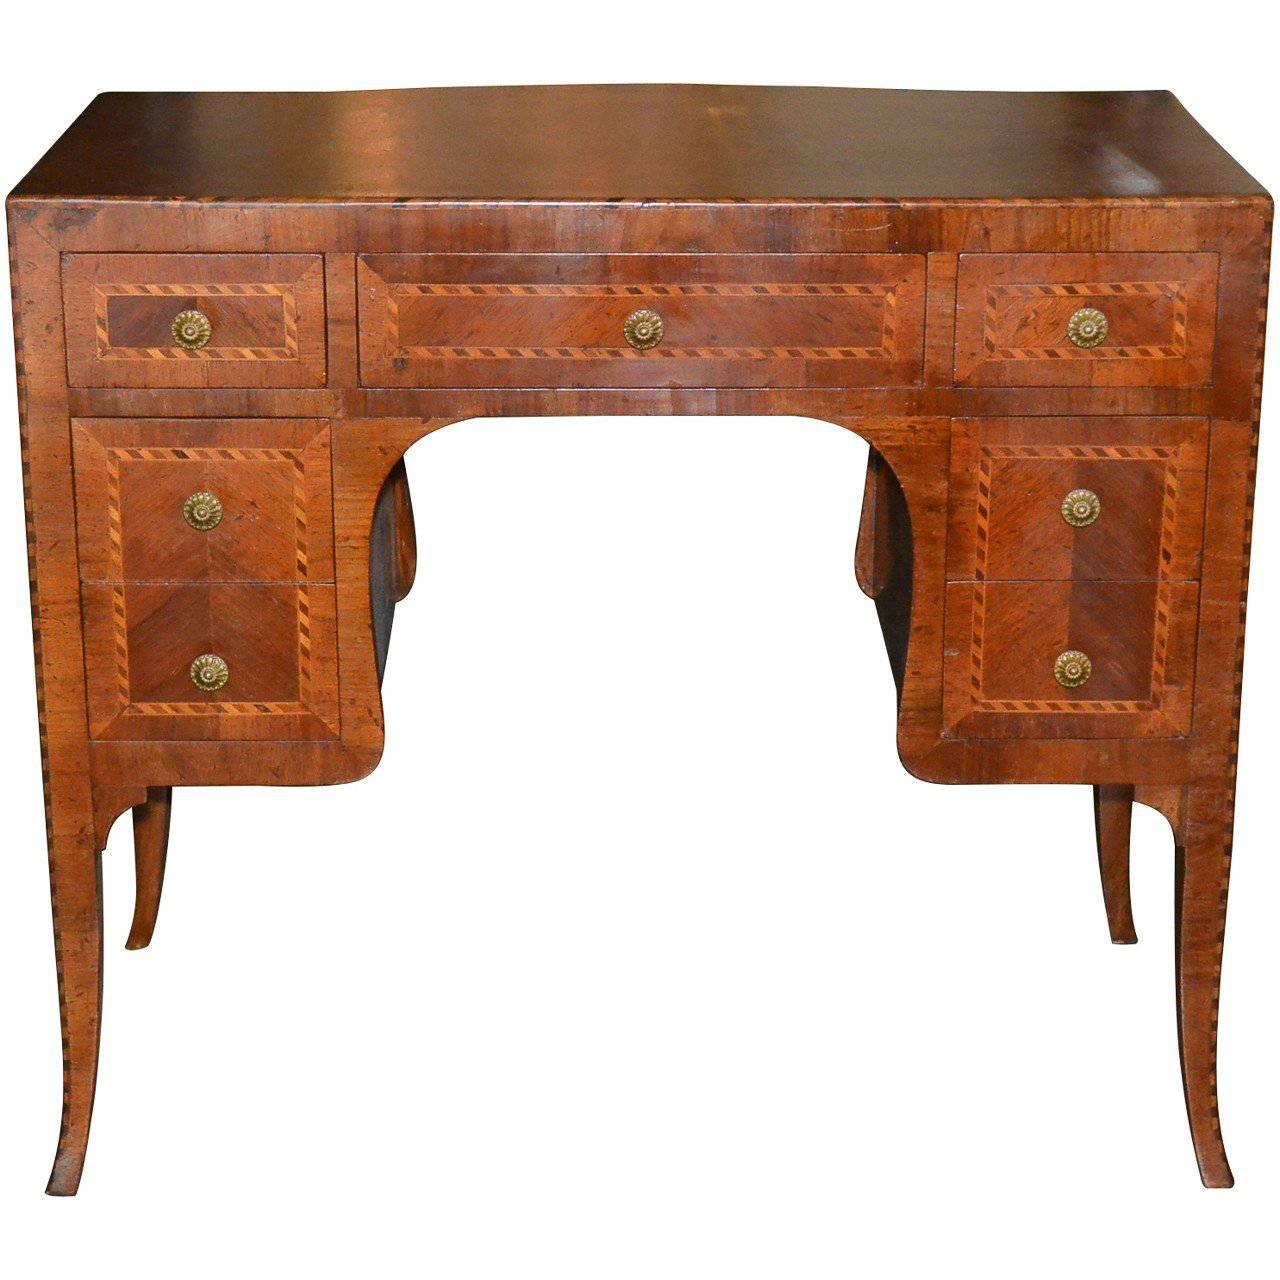 19th Century Italian Inlaid Vanity Table / Desk